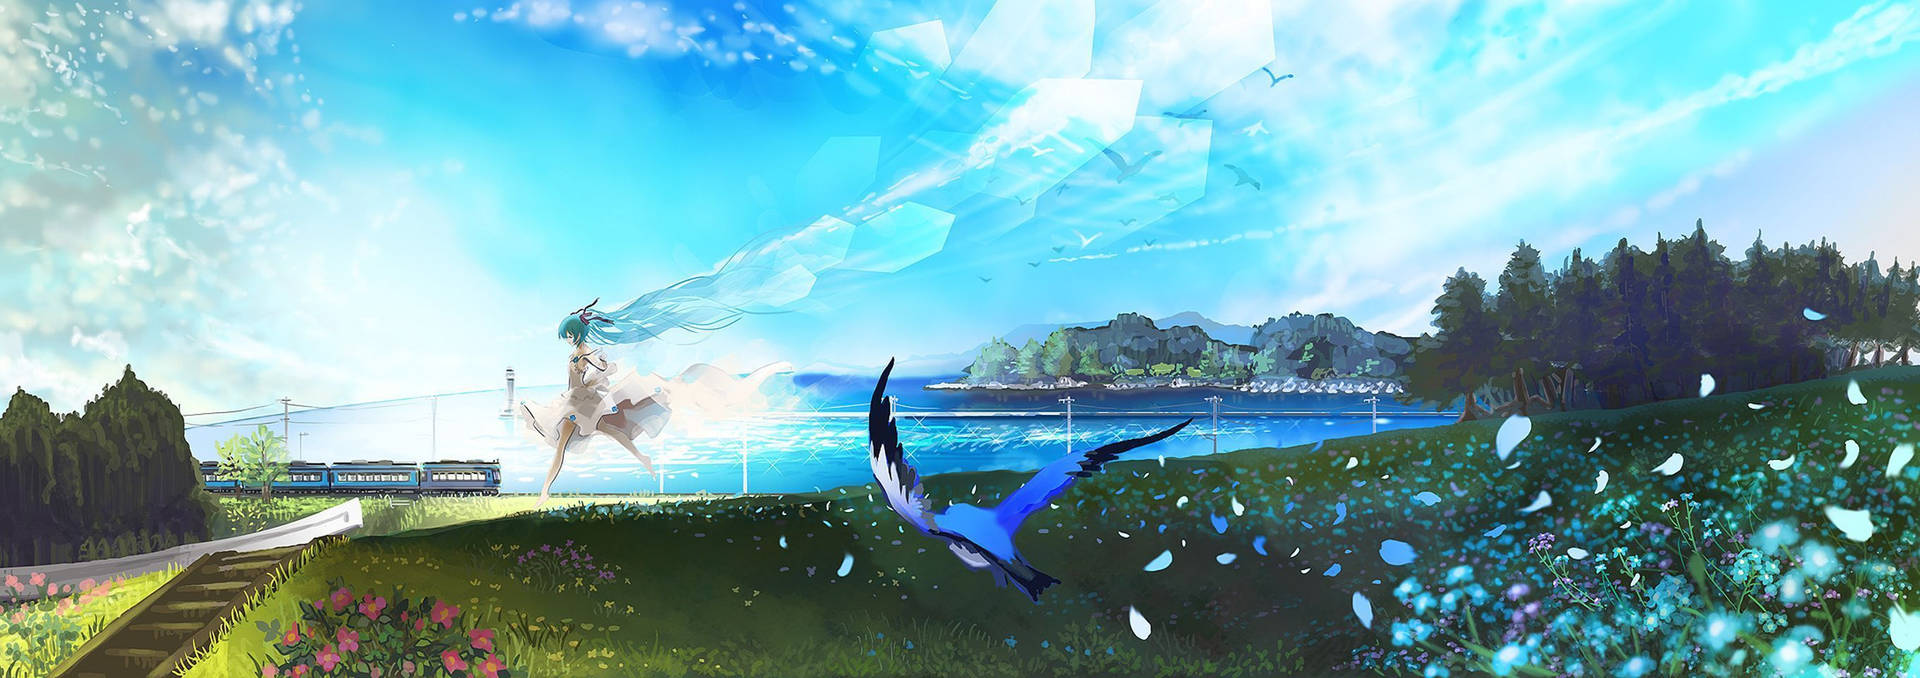 Garden Anime Landscape Background